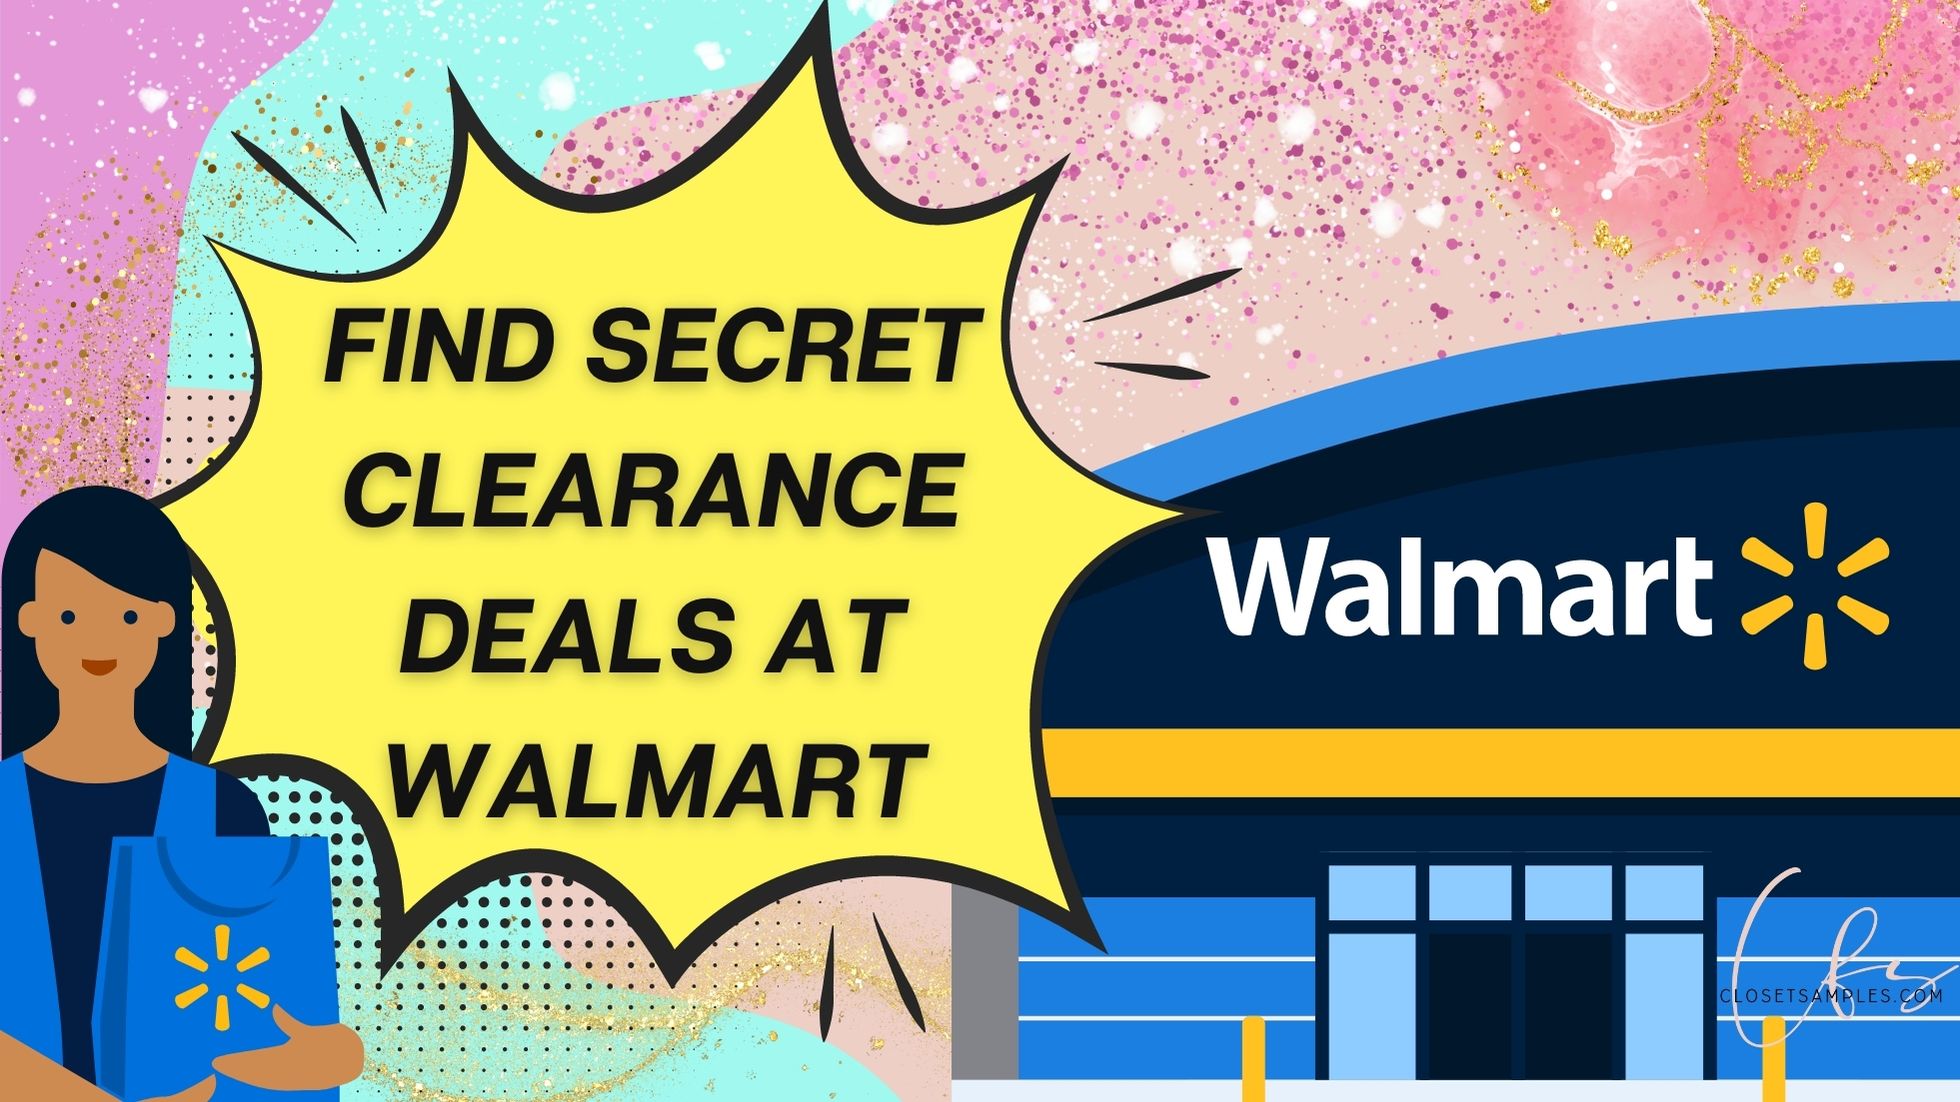 Find Secret Clearance Deals at Walmart closetsamples